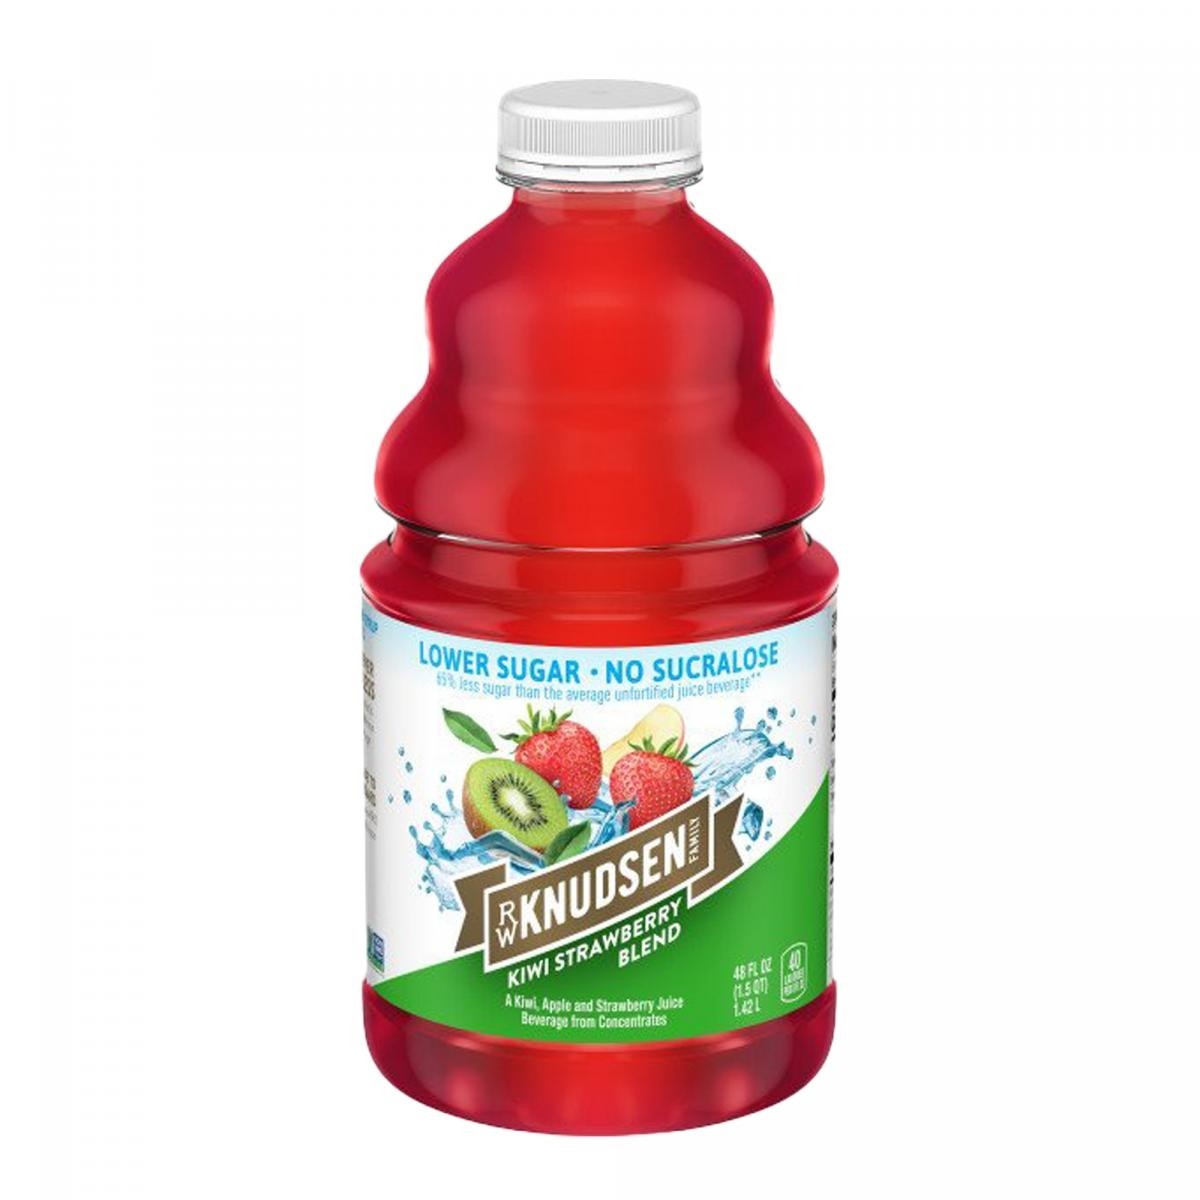 R.W. Knudsen - 奇異果士多啤梨雜果汁 | 無添加糖  | KIWI Strawberry Blend Juice | Lower Sugar